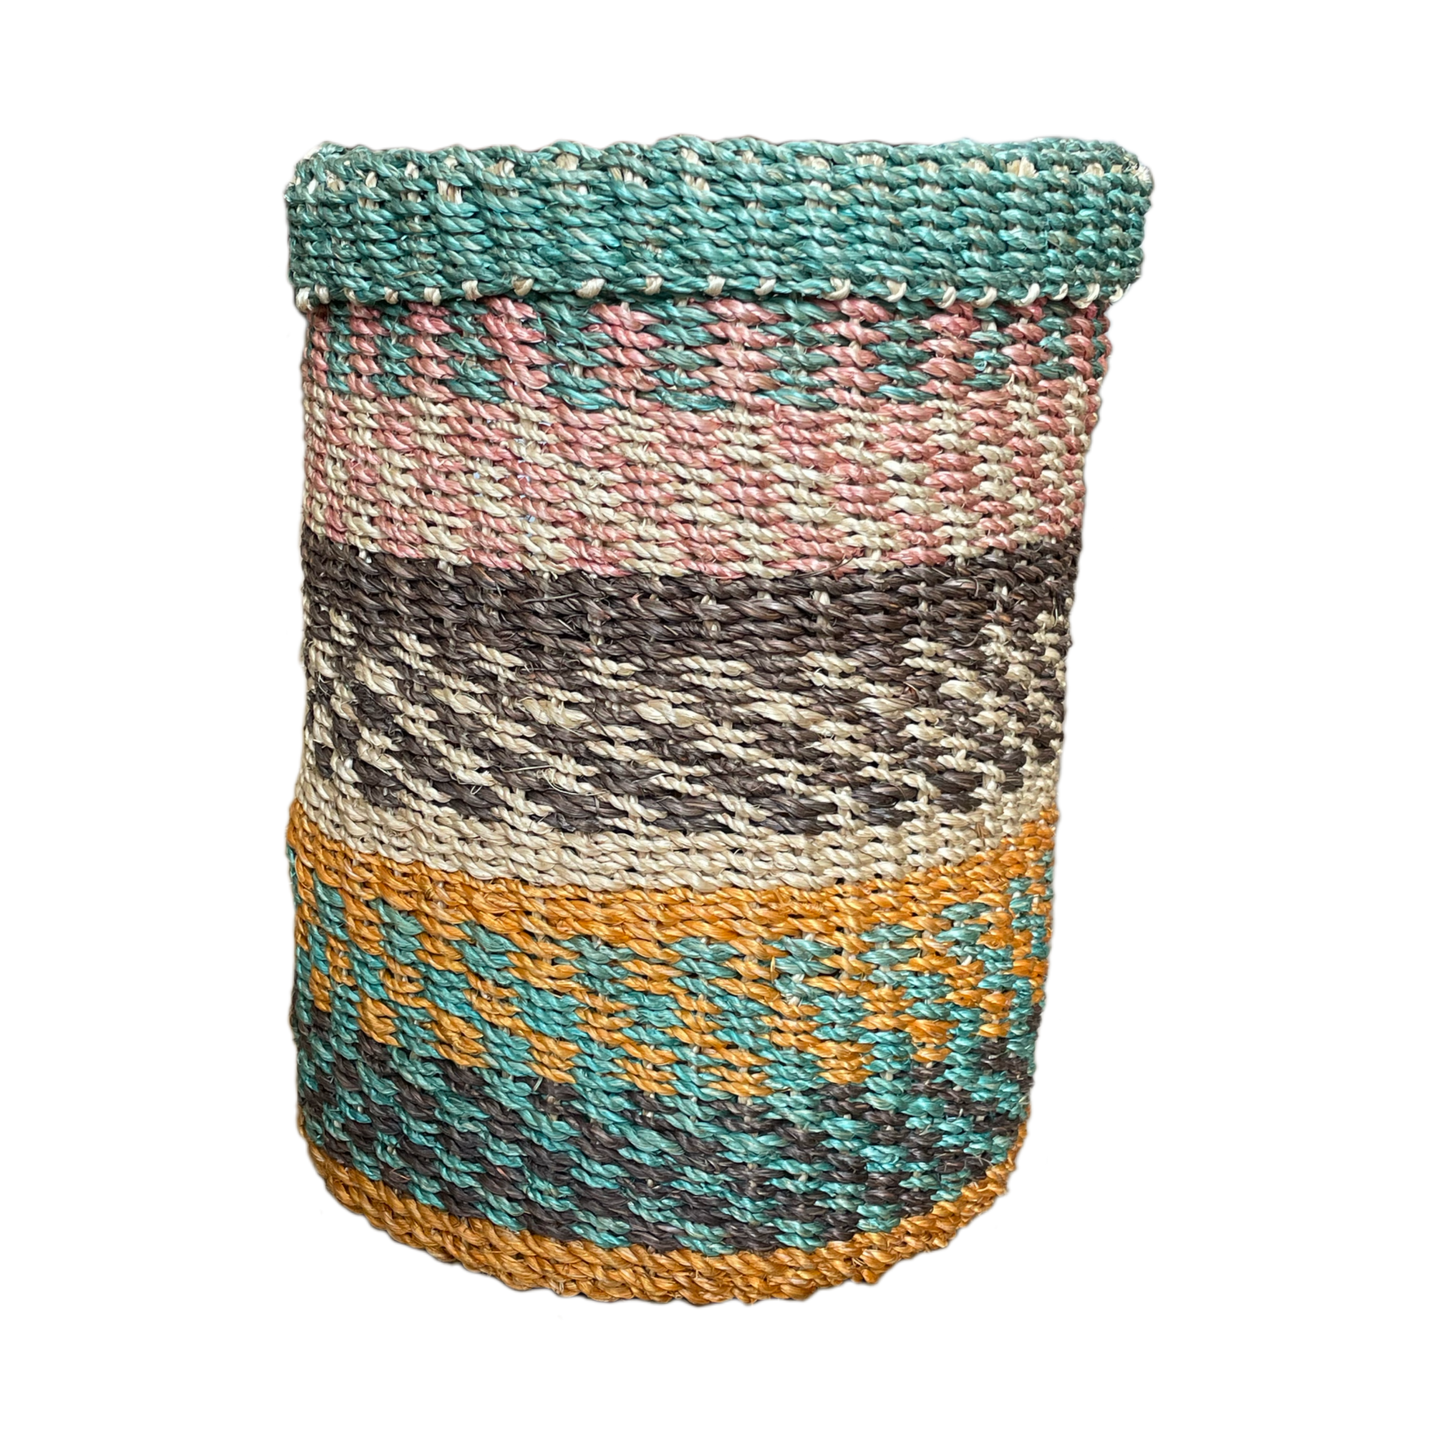 Cylindrical Woven Vase Basket